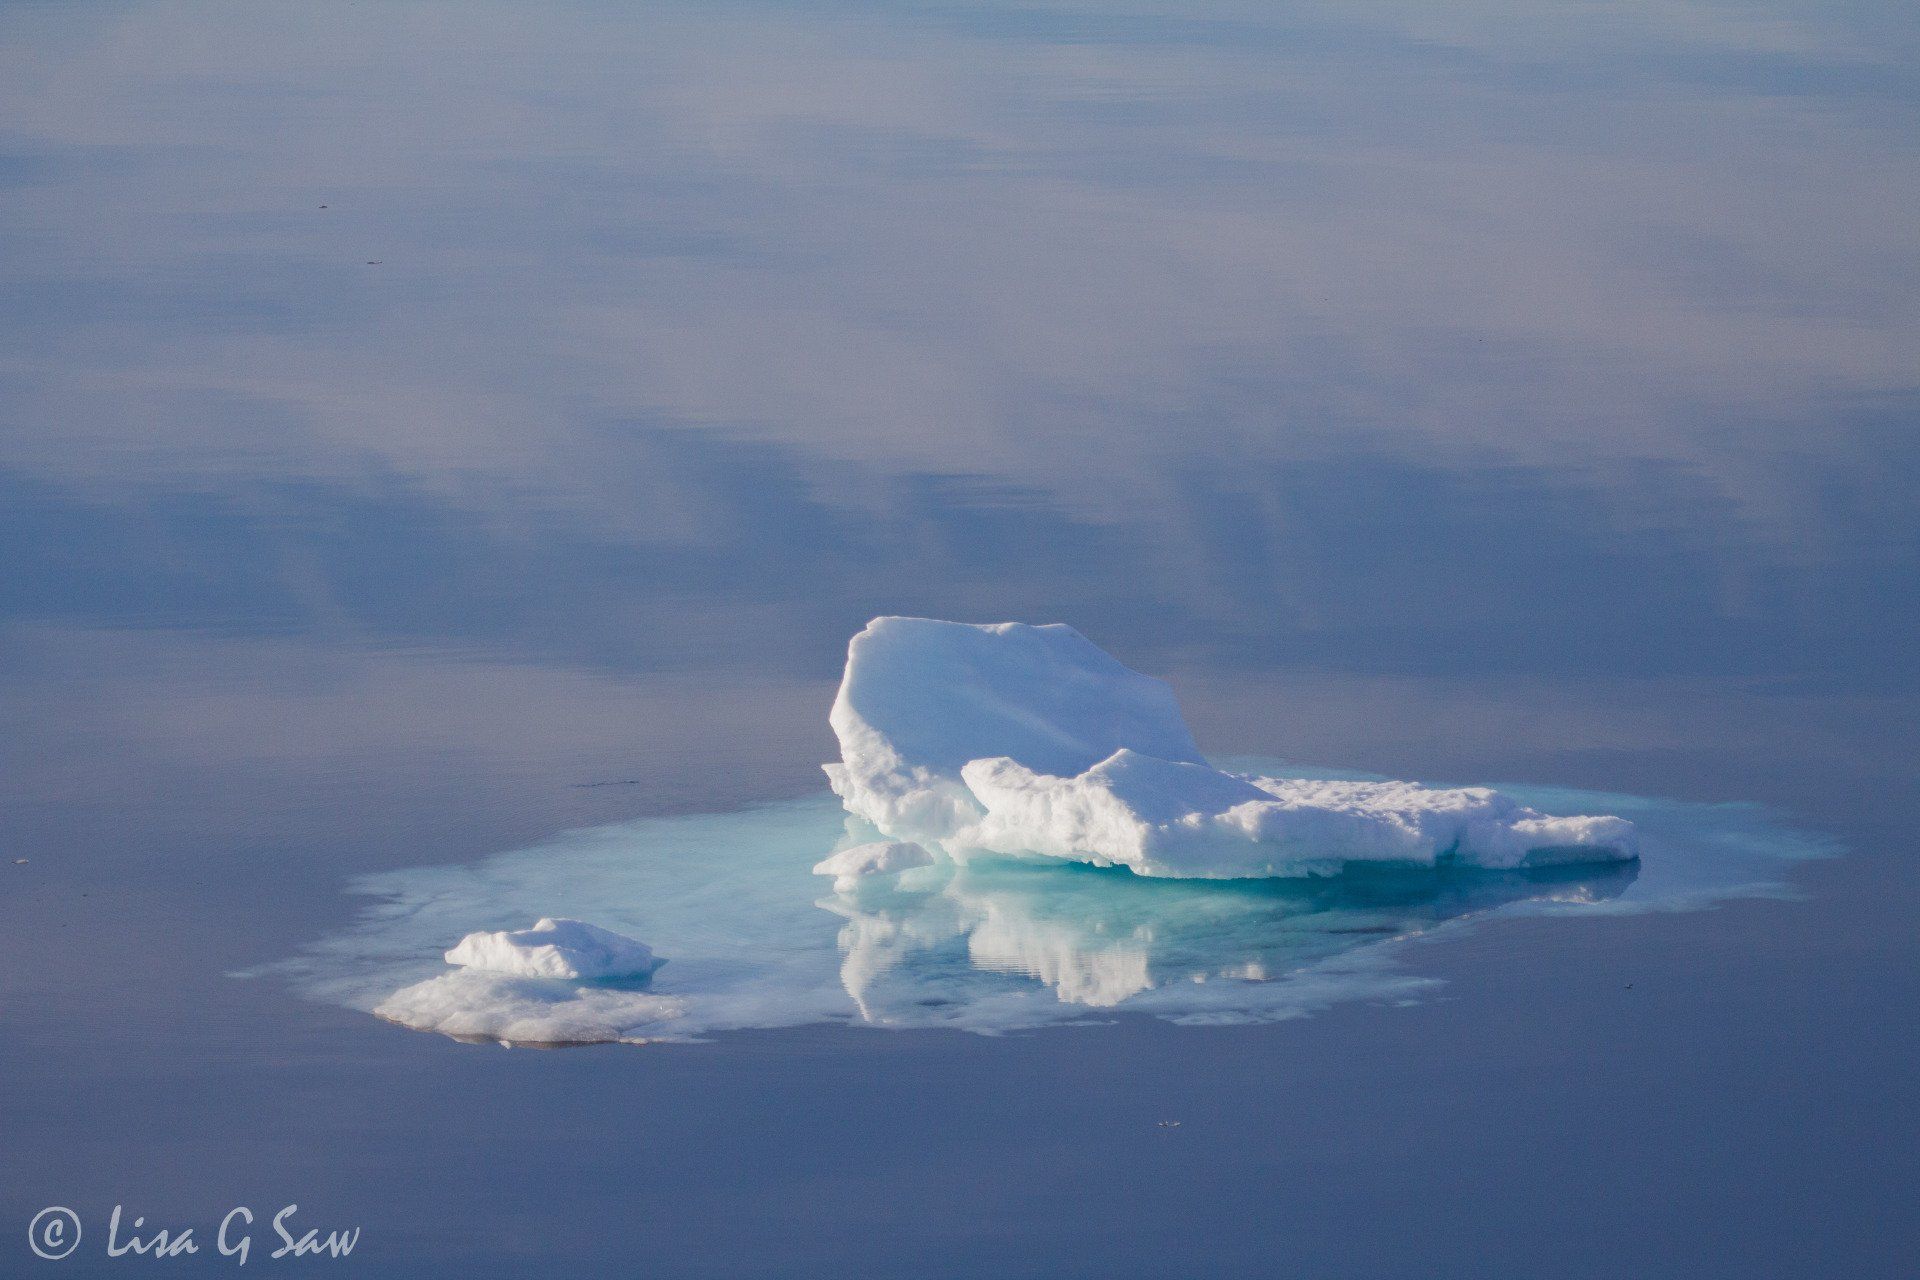 Small chunk of Arctic sea ice on calm water